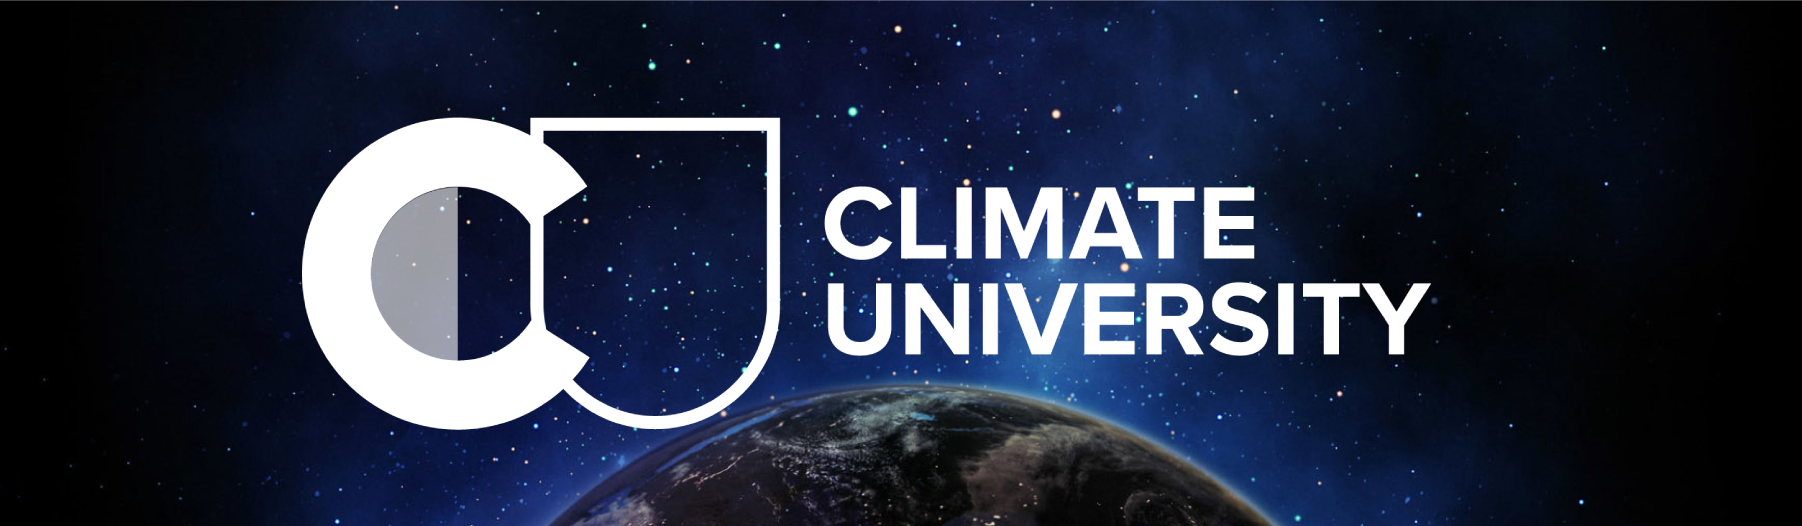 Climate University banner